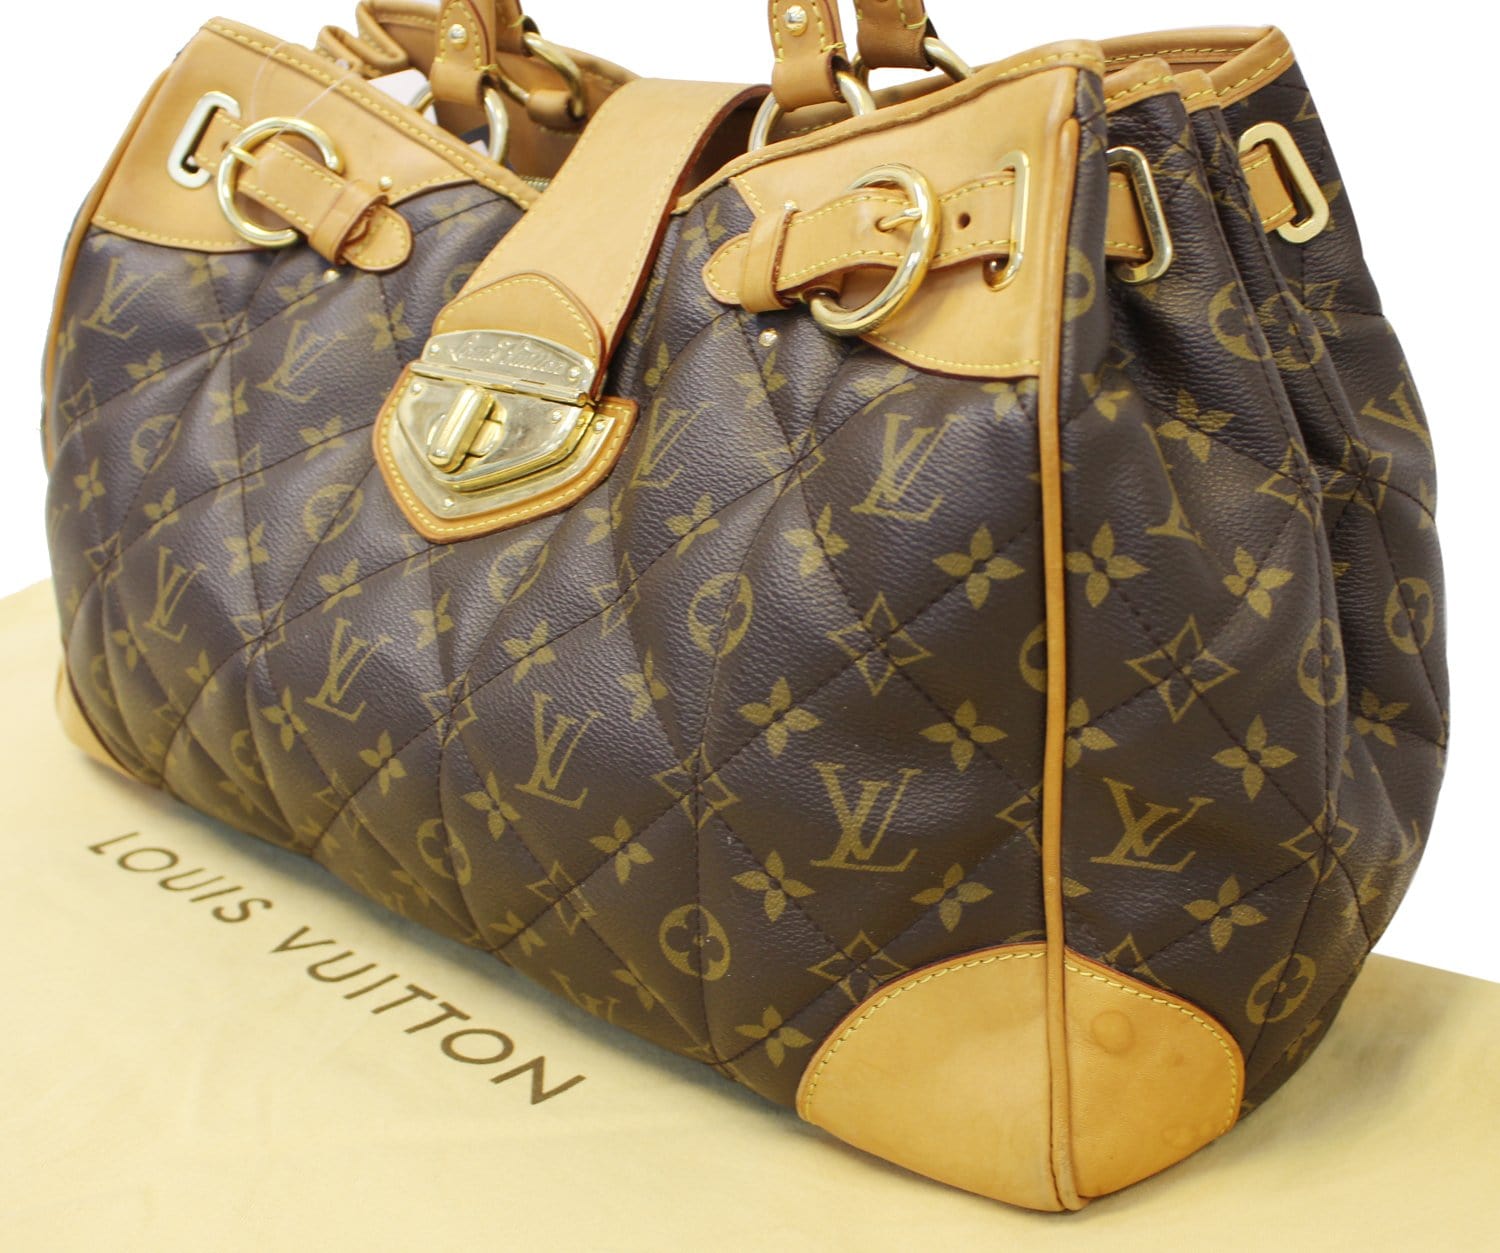 Etoile shopper leather handbag Louis Vuitton Brown in Leather